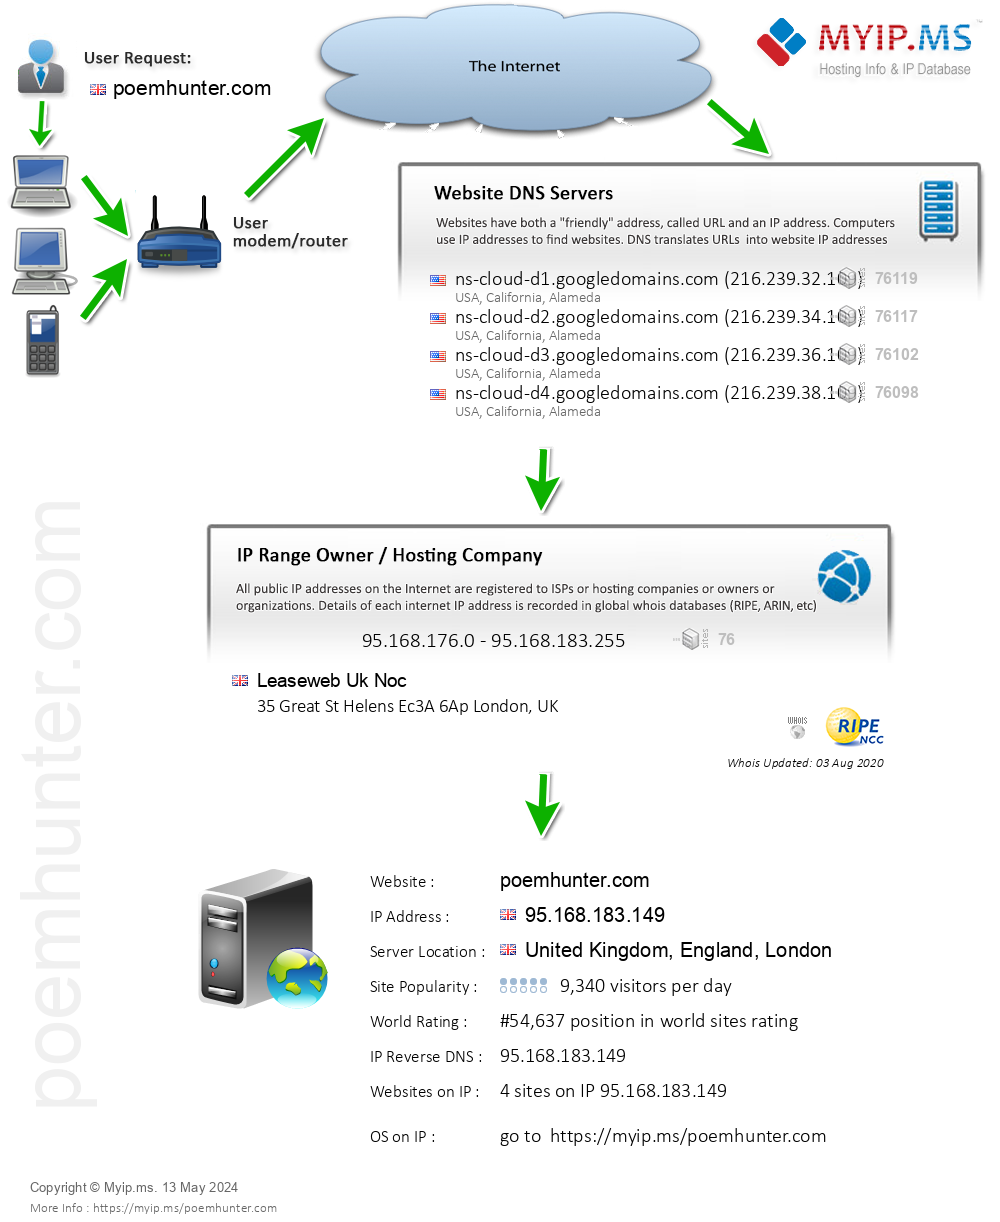 Poemhunter.com - Website Hosting Visual IP Diagram